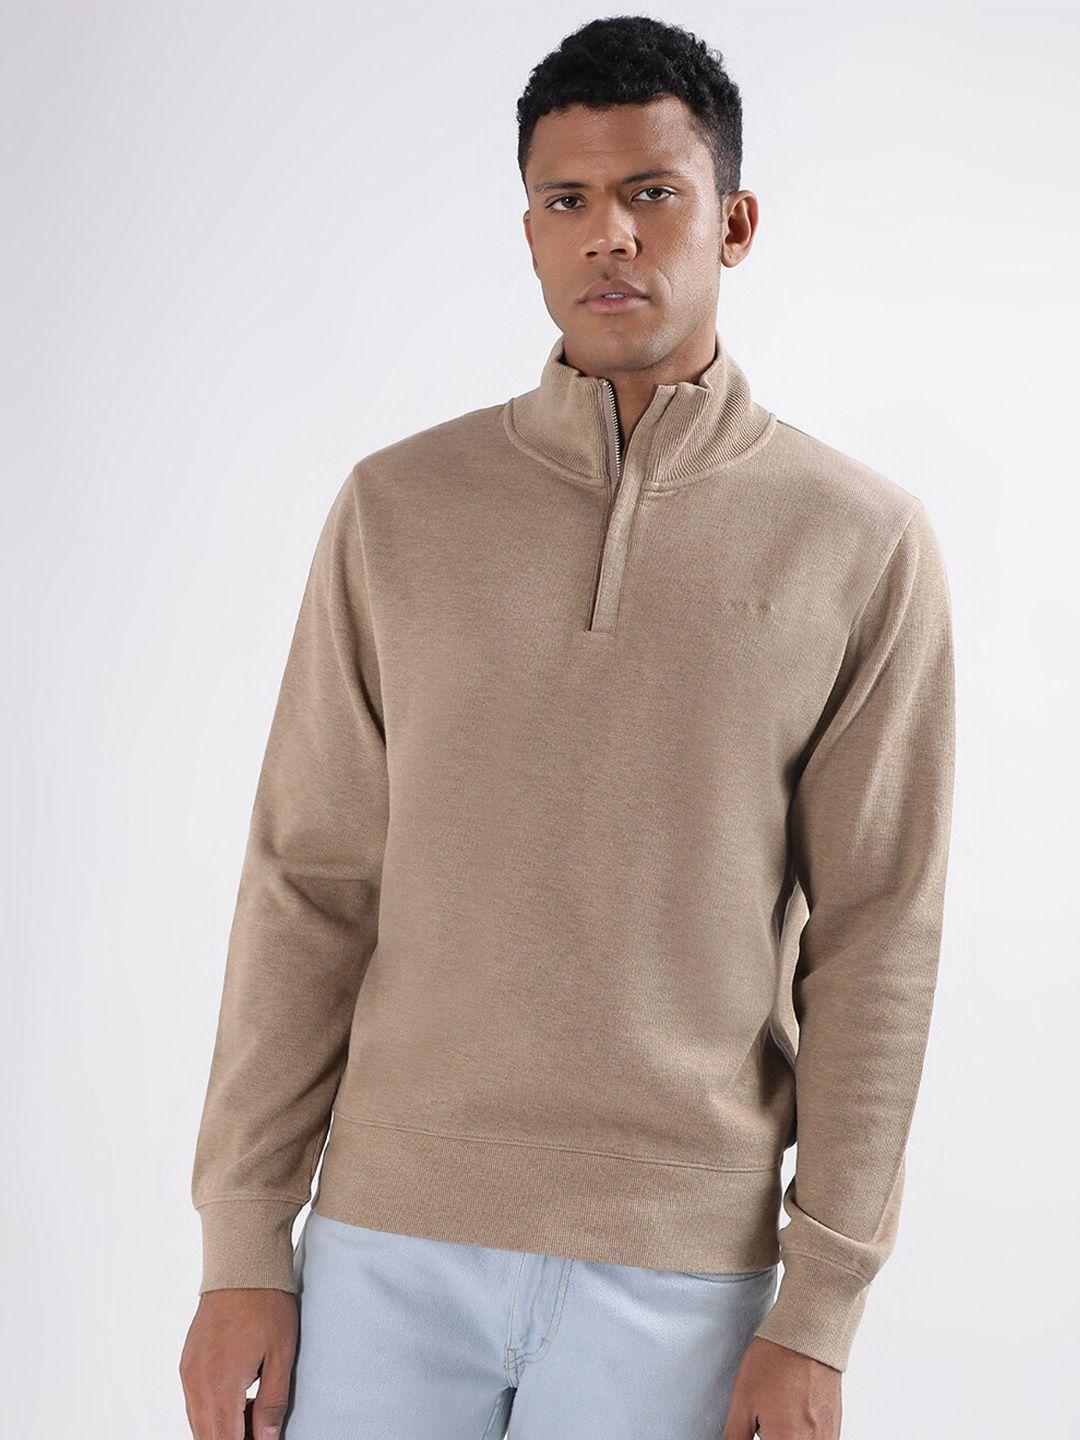 gant mock collar half zipper pure cotton pullover sweatshirt